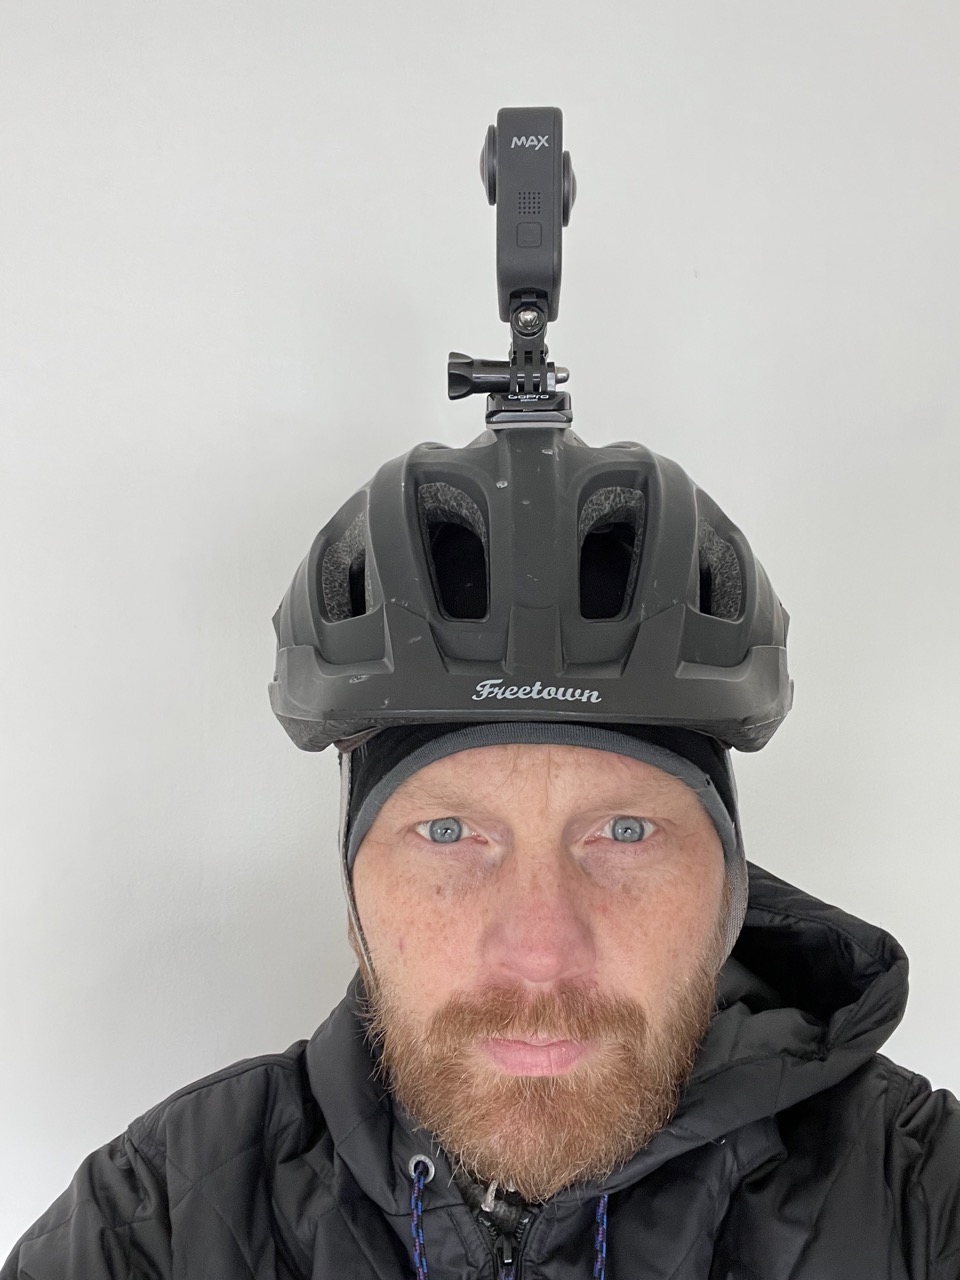 me with sideways mounted GoPro on helmet